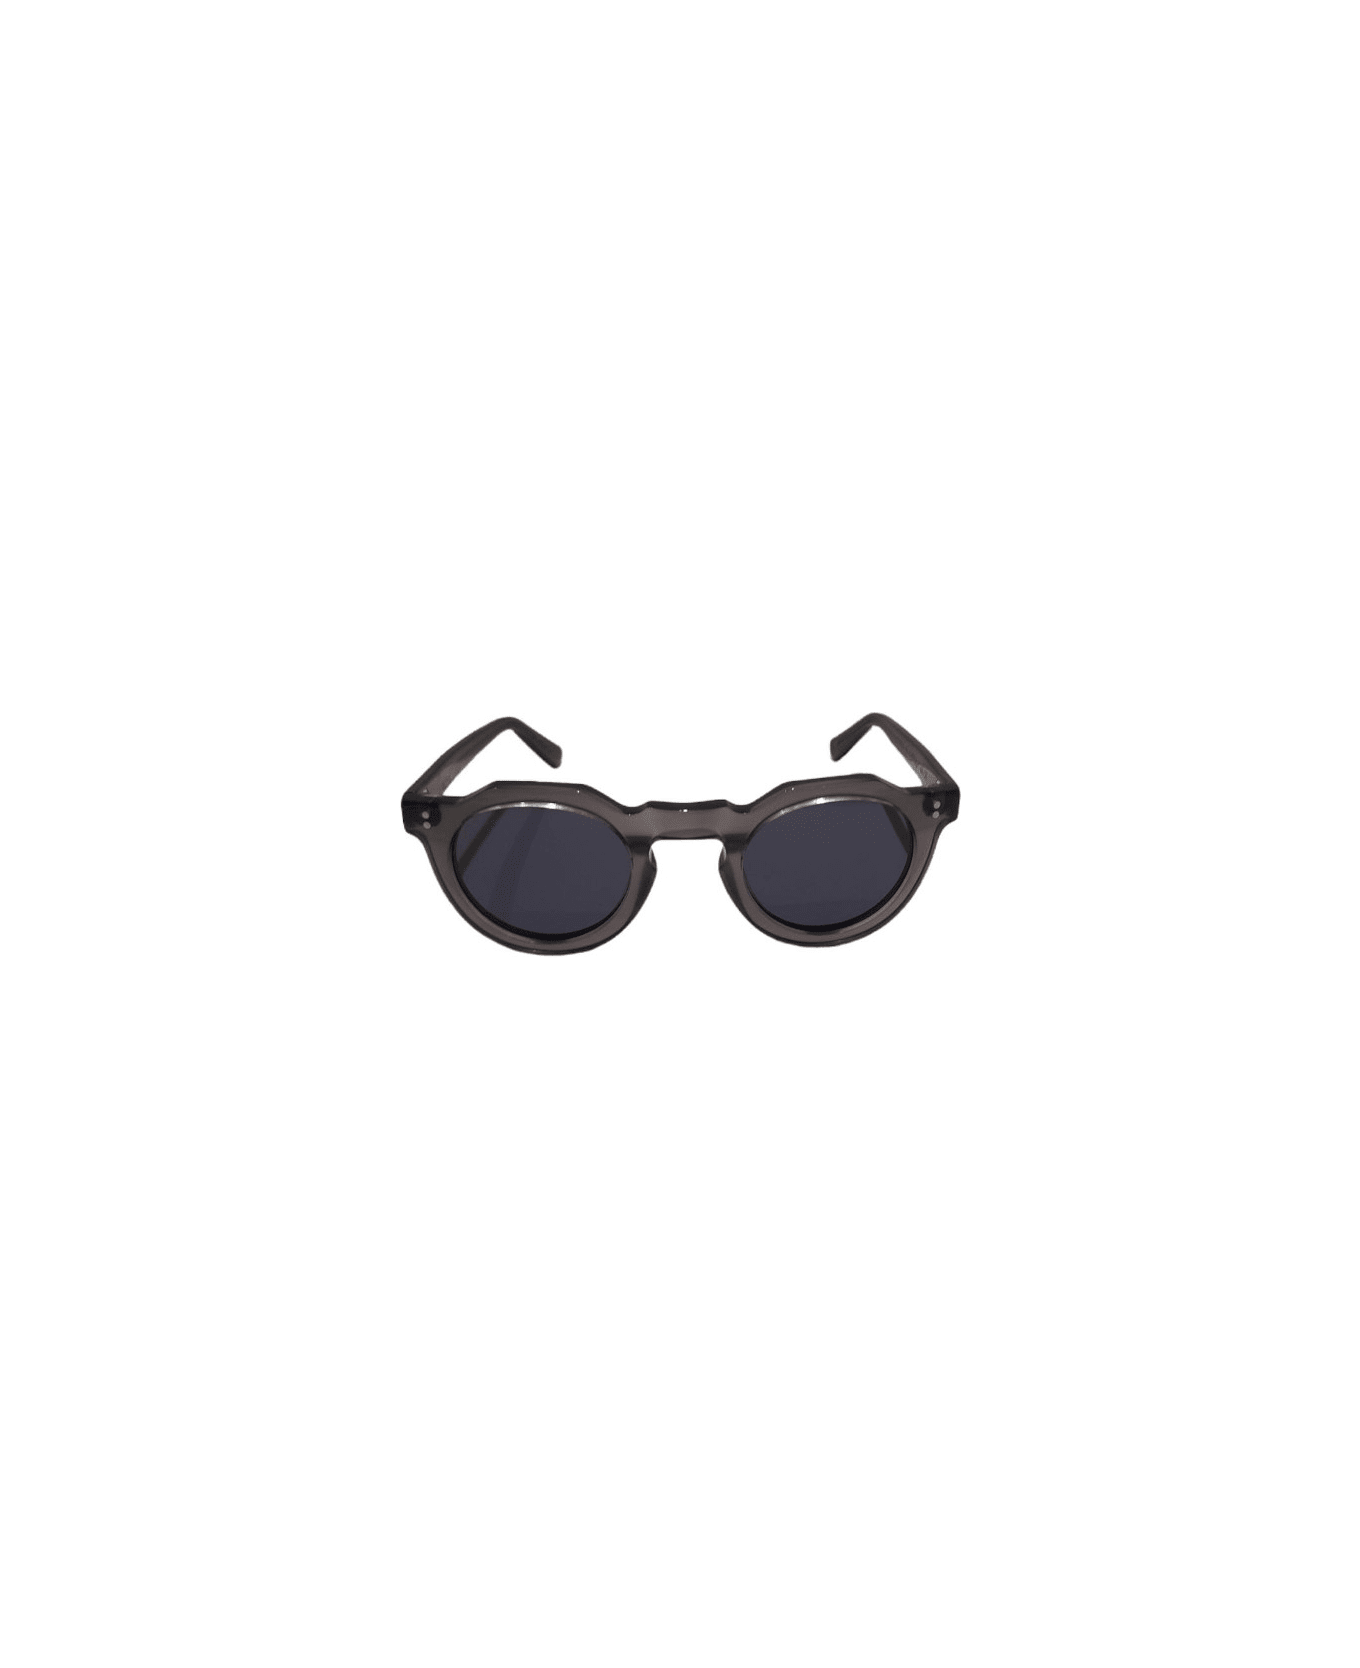 Lesca Picas grey Sunglasses - Grey サングラス